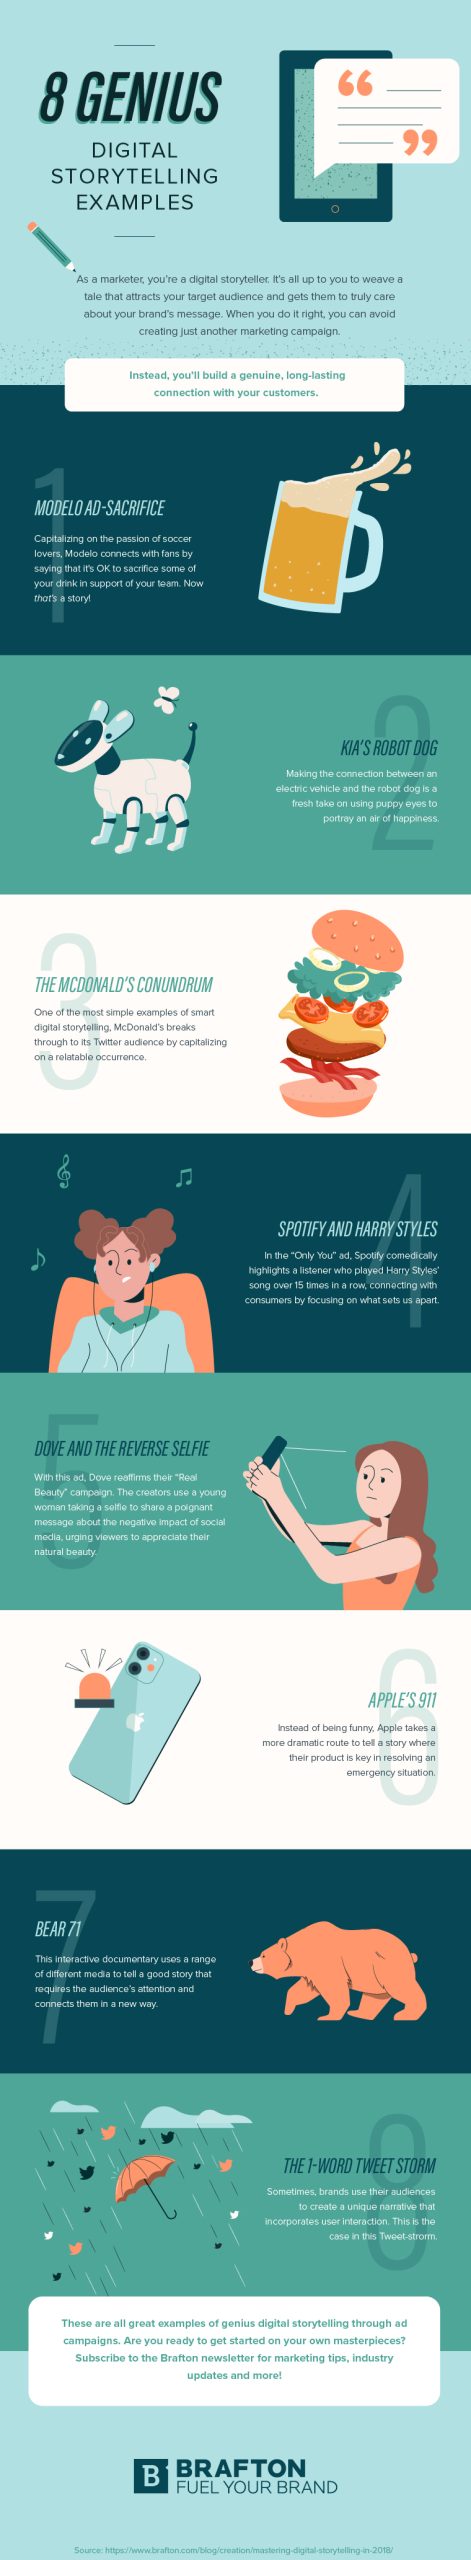 8 Genius Digital Storytelling Examples infographic